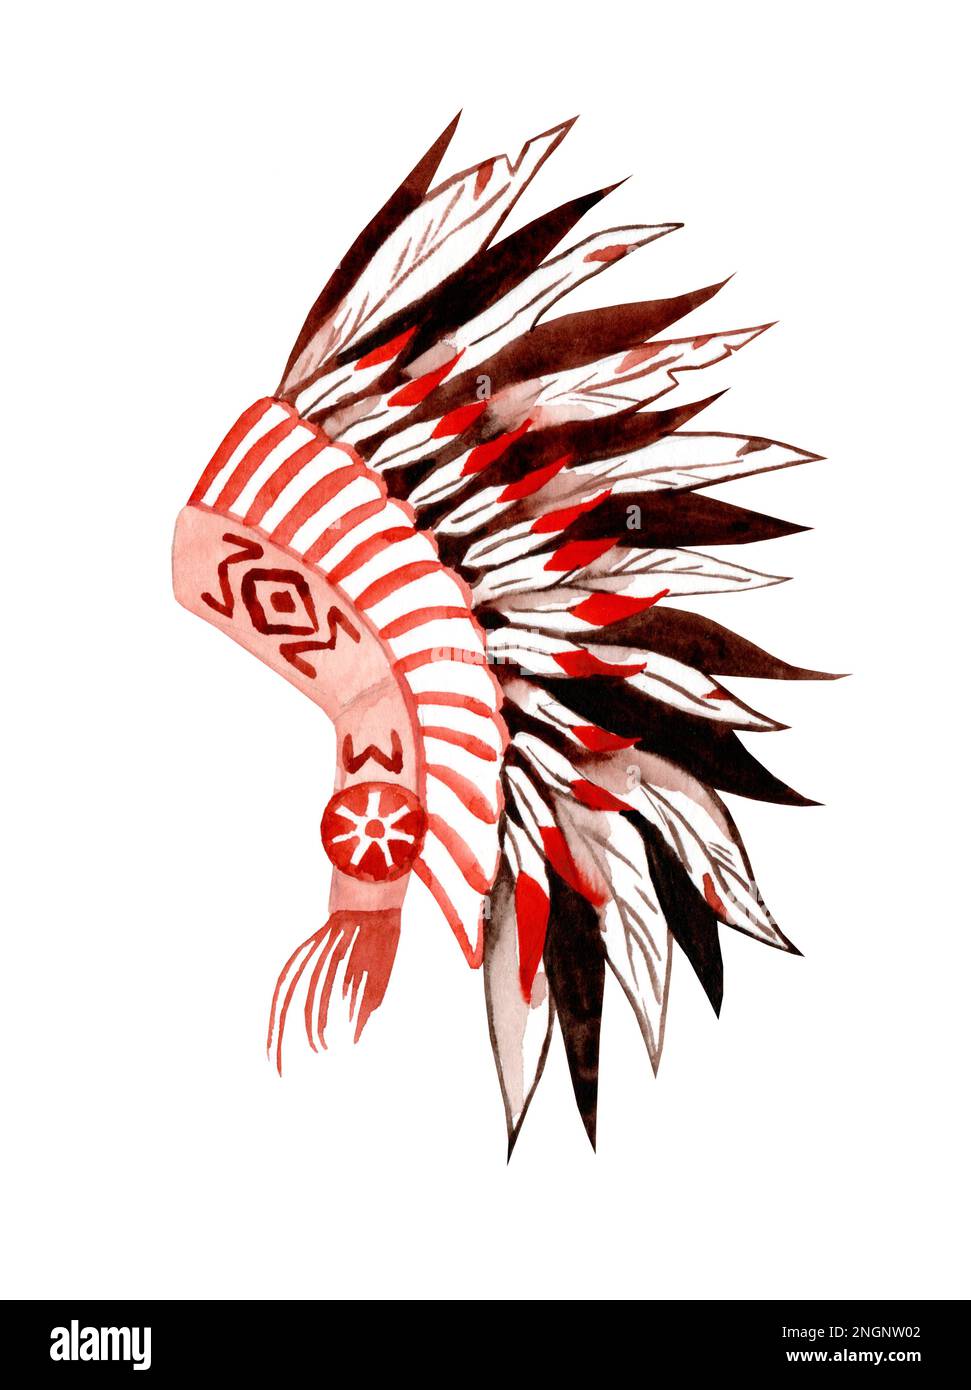 Adresse indienne autochtone (talisman en chef indien, adresse tribale indienne). Illustration aquarelle Banque D'Images